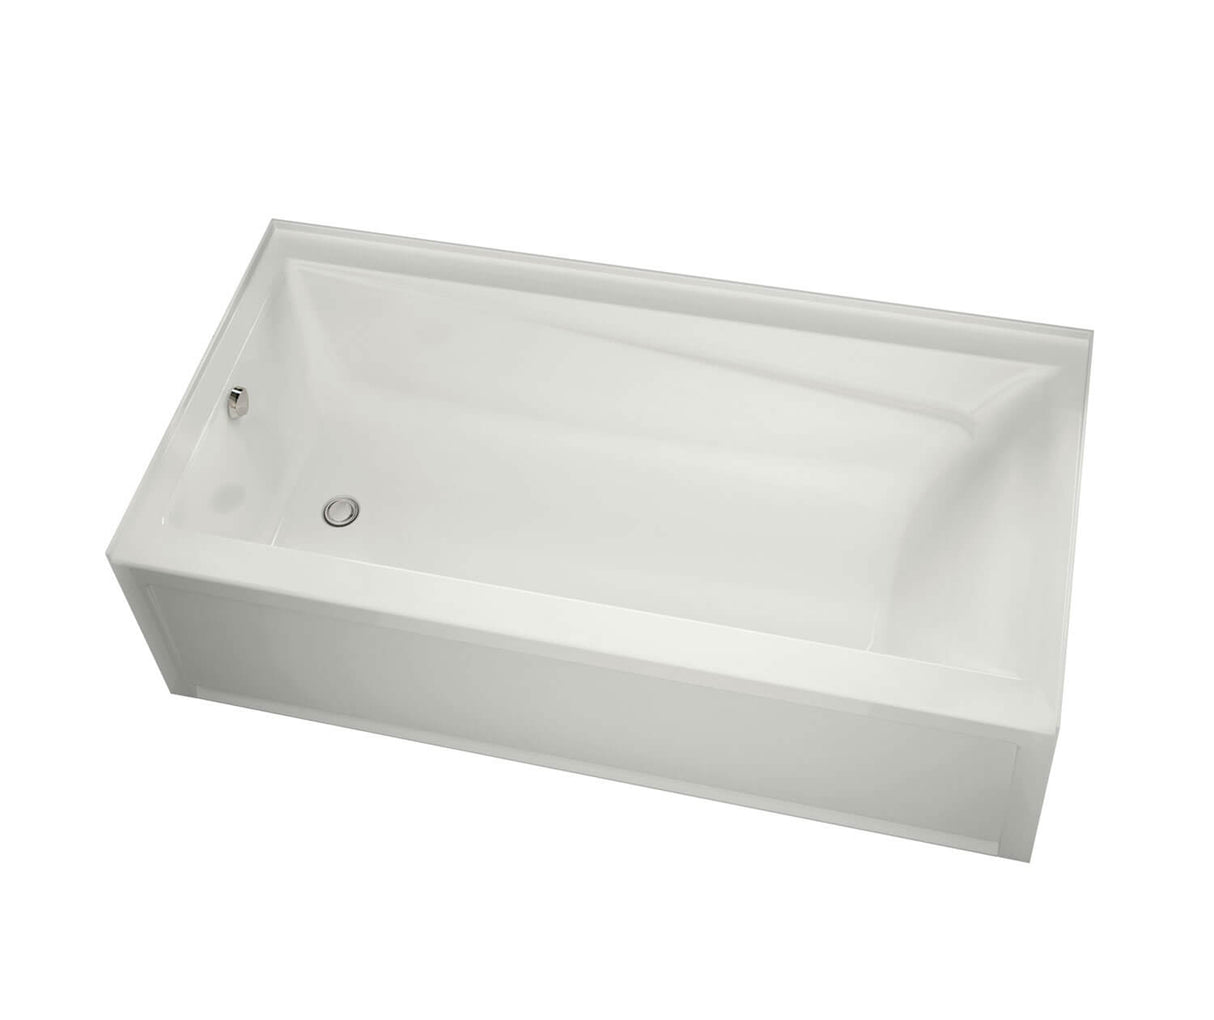 MAAX 105519-097-001-101 Exhibit 6030 IFS Acrylic Alcove Right-Hand Drain Combined Whirlpool & Aeroeffect Bathtub in White